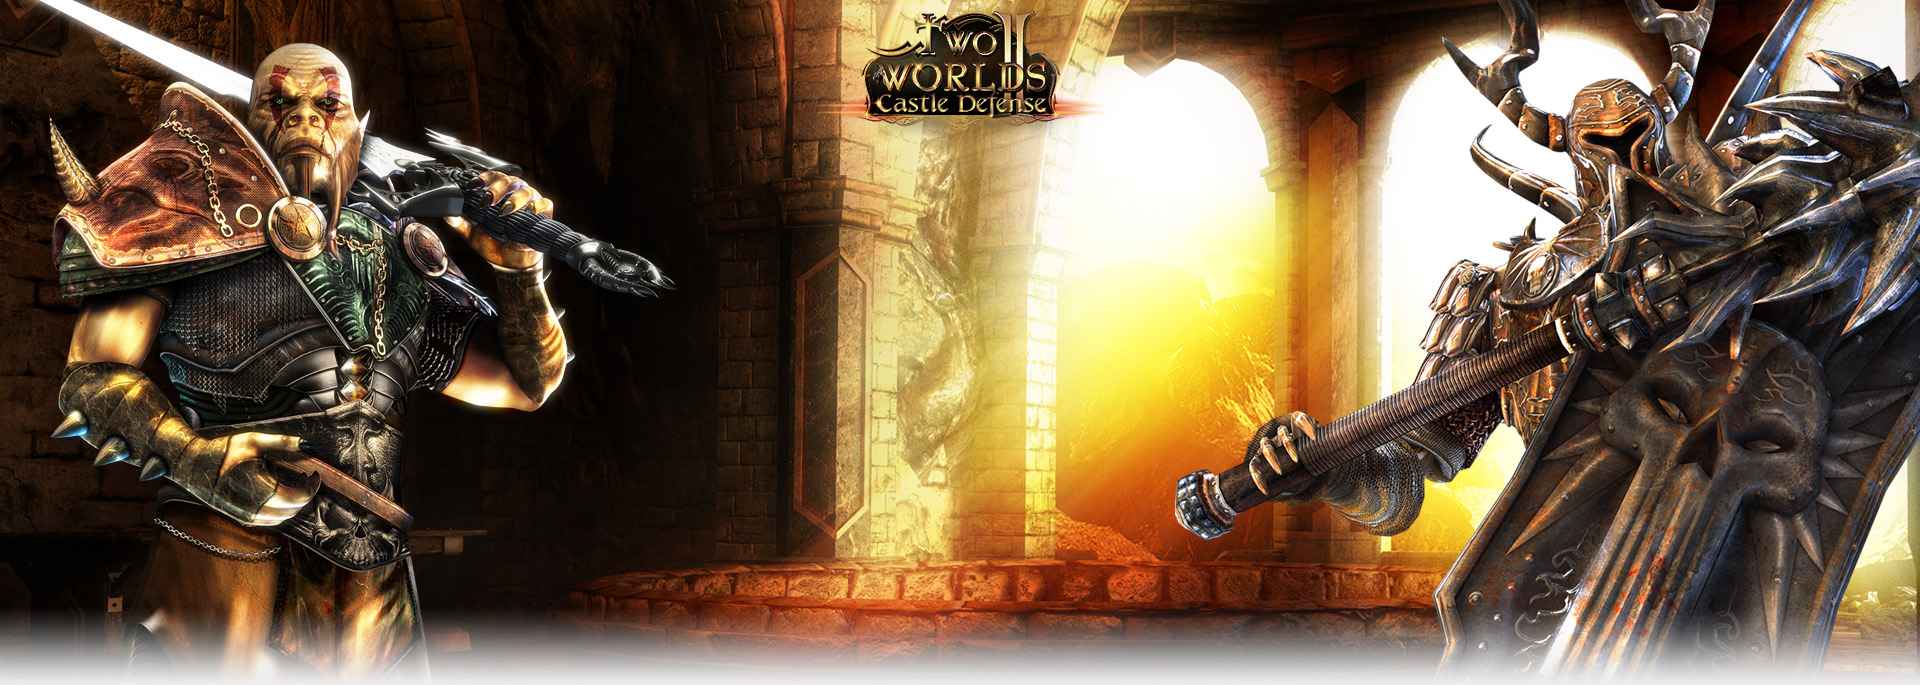 Two Worlds II Castle Defense Steam CD Key - background